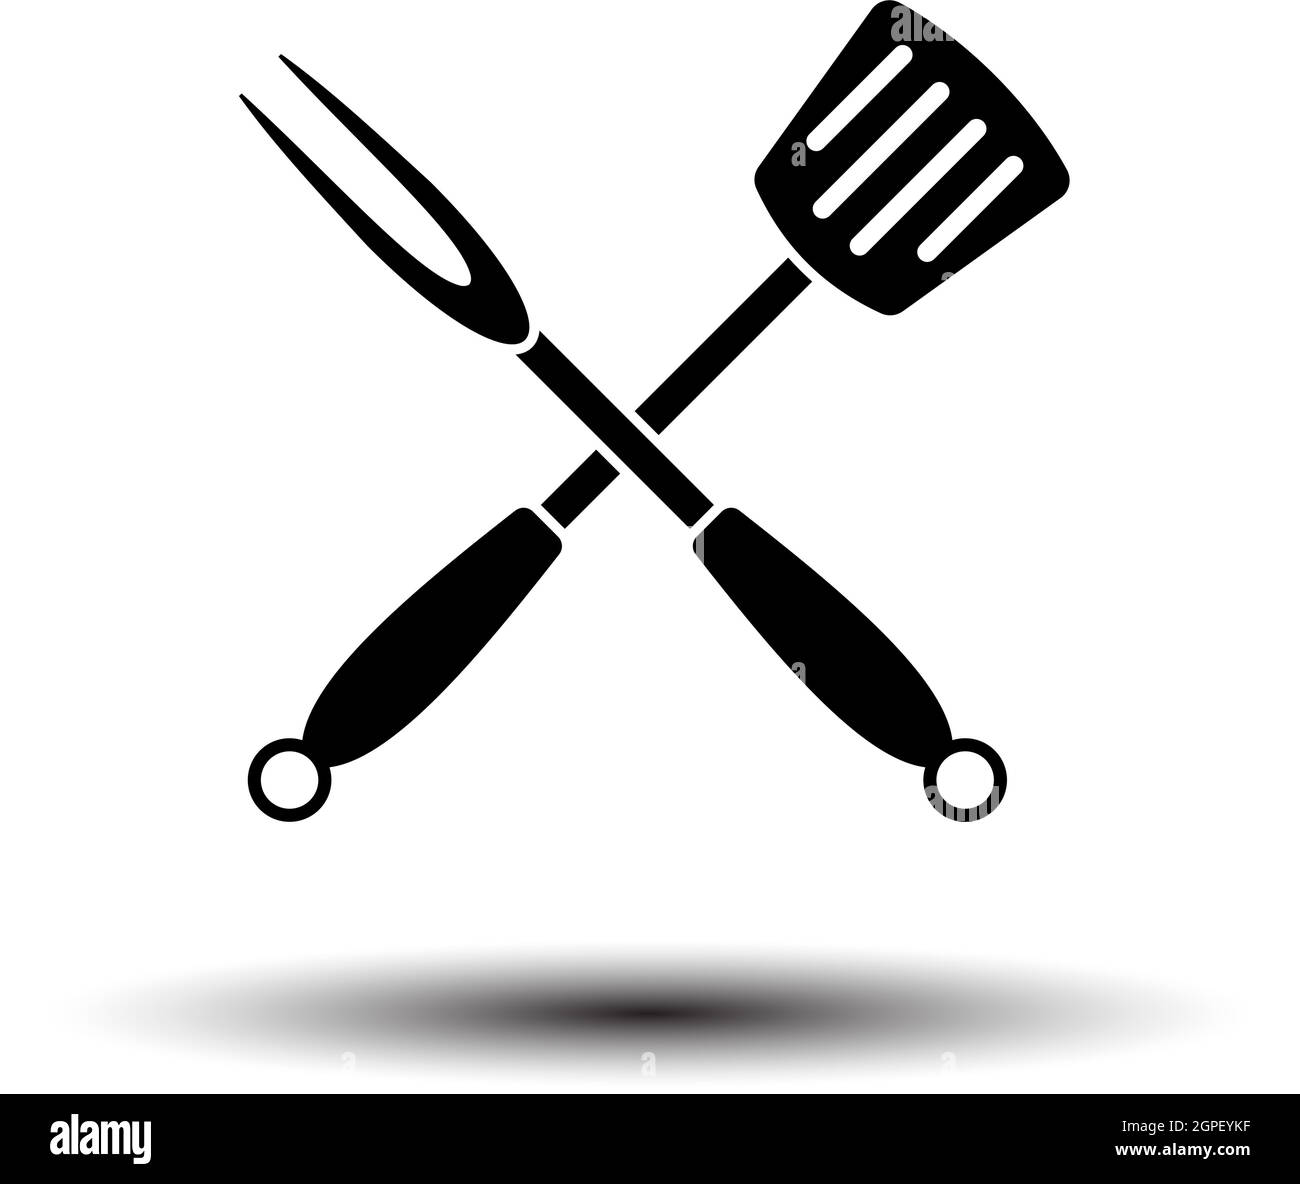 https://c8.alamy.com/comp/2GPEYKF/crossed-frying-spatula-and-fork-icon-2GPEYKF.jpg